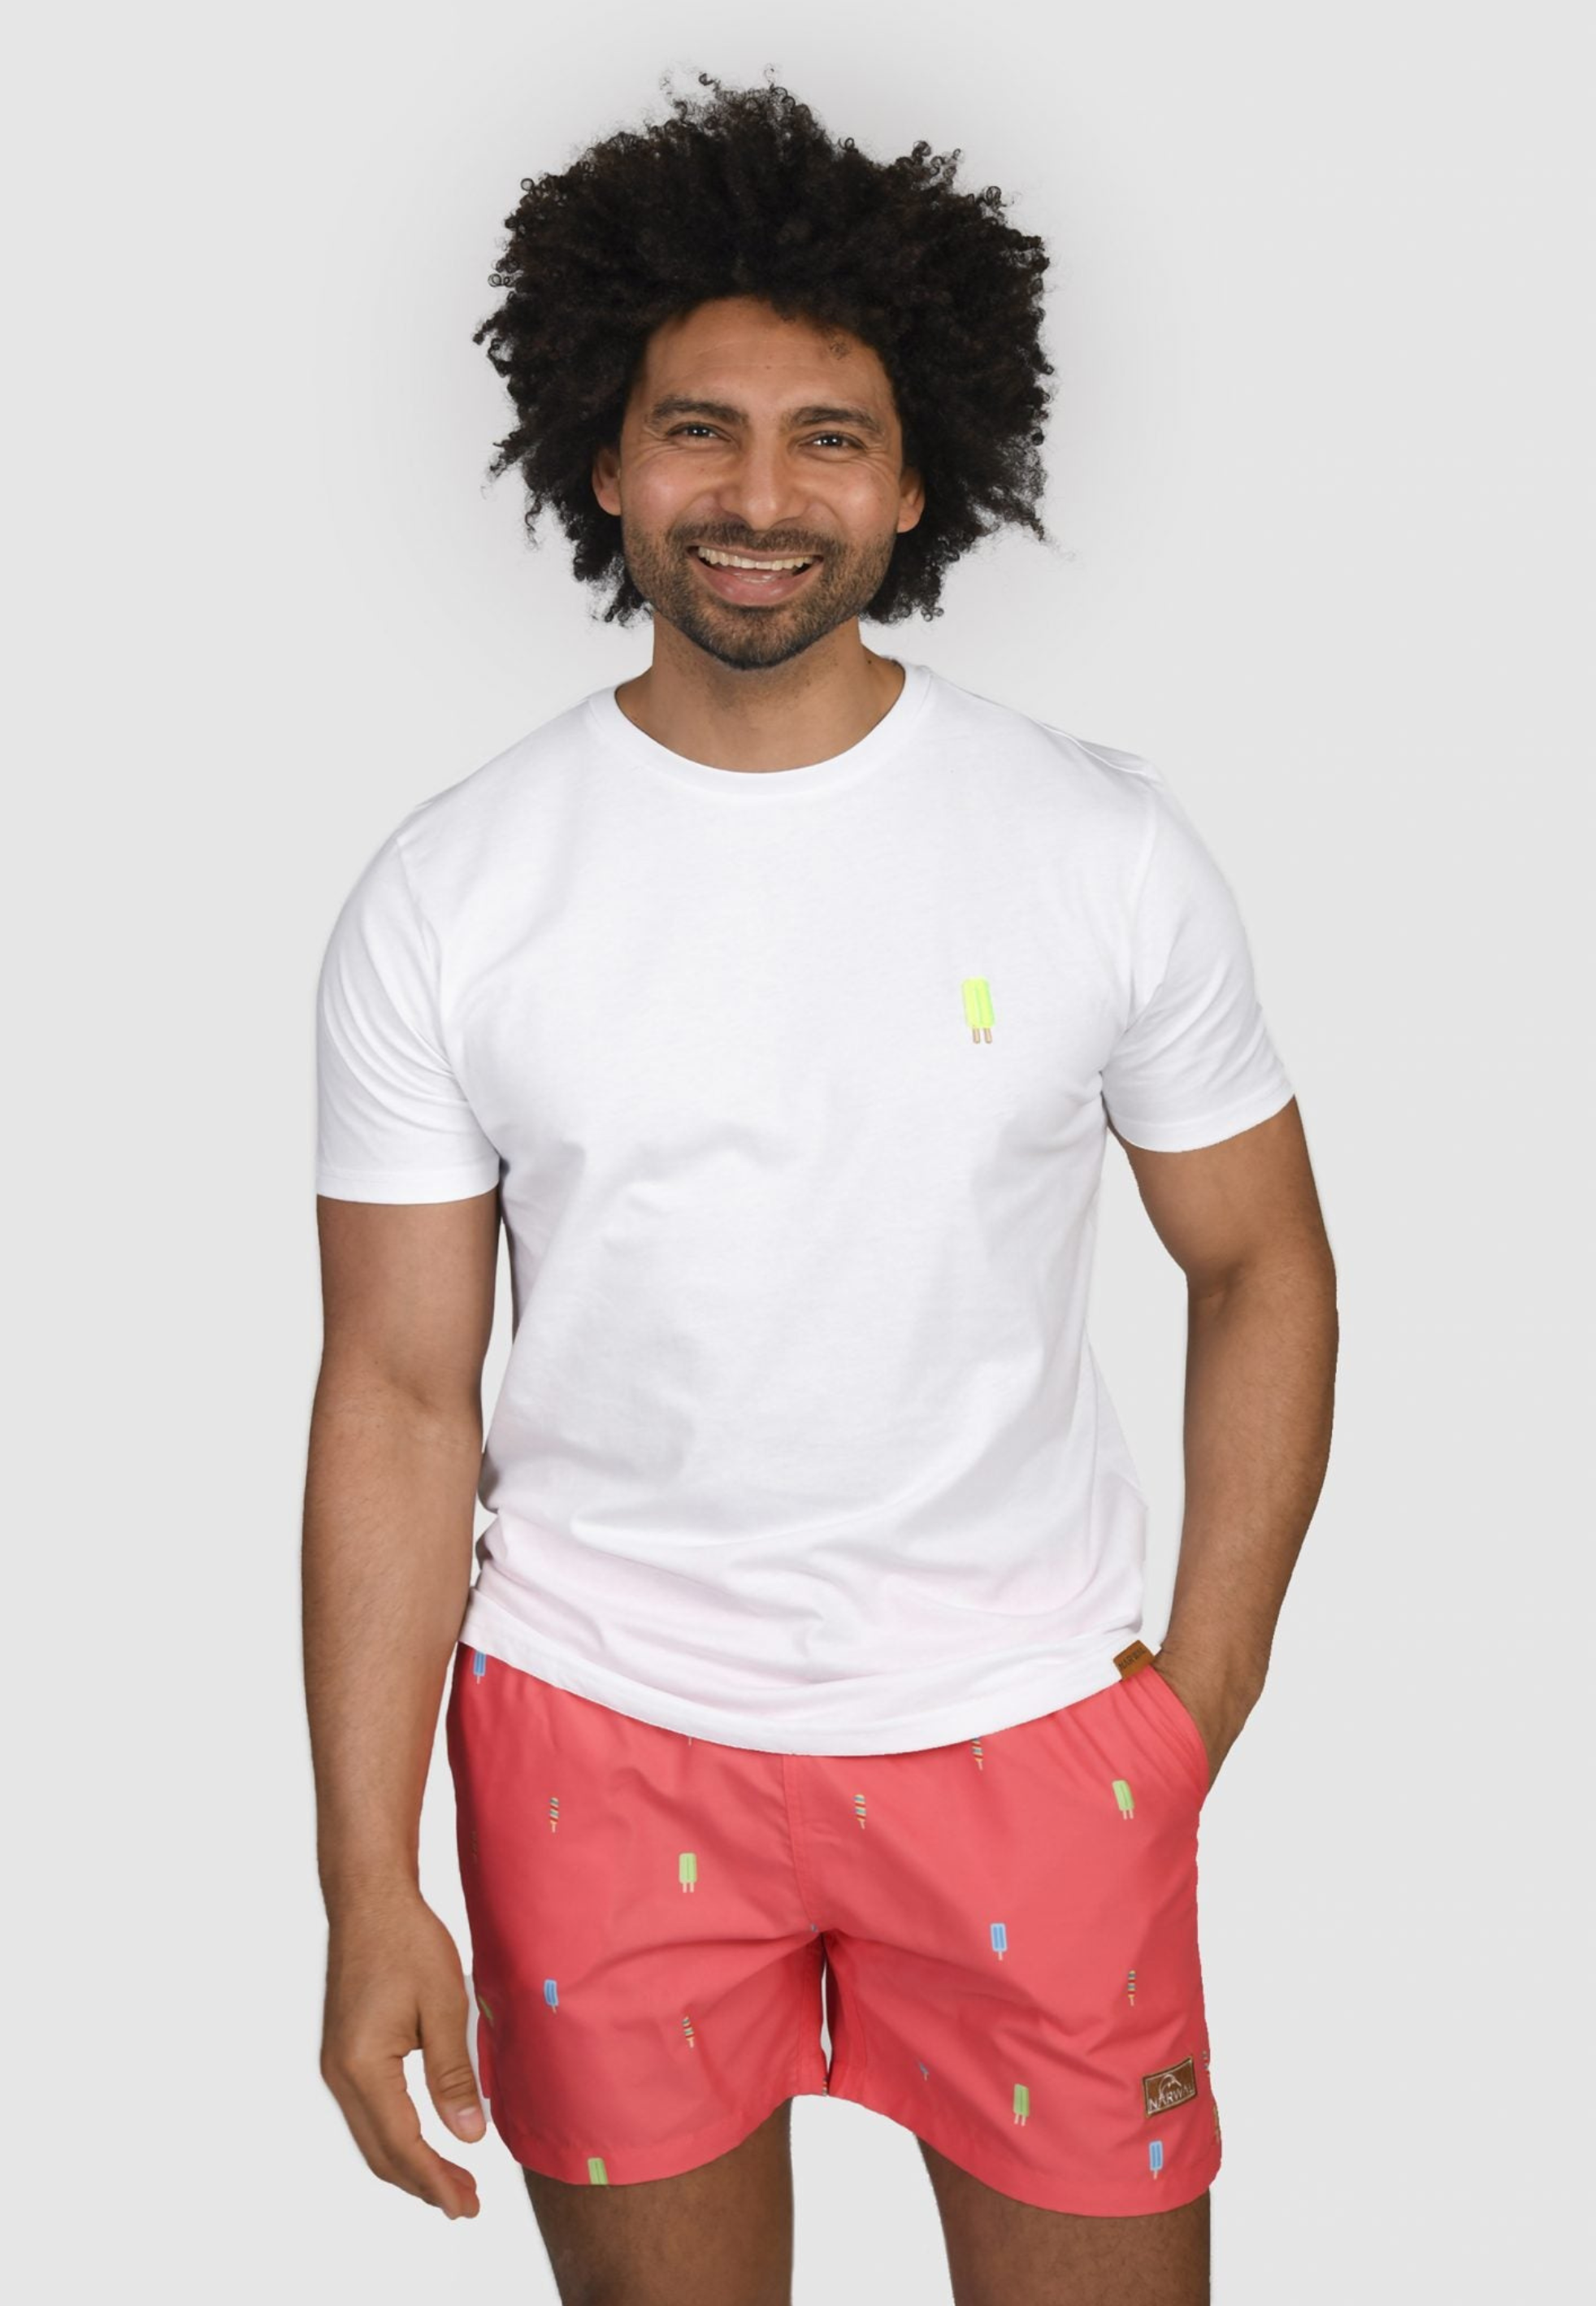 Popsicle Swim Trunks & T-shirt Bundle